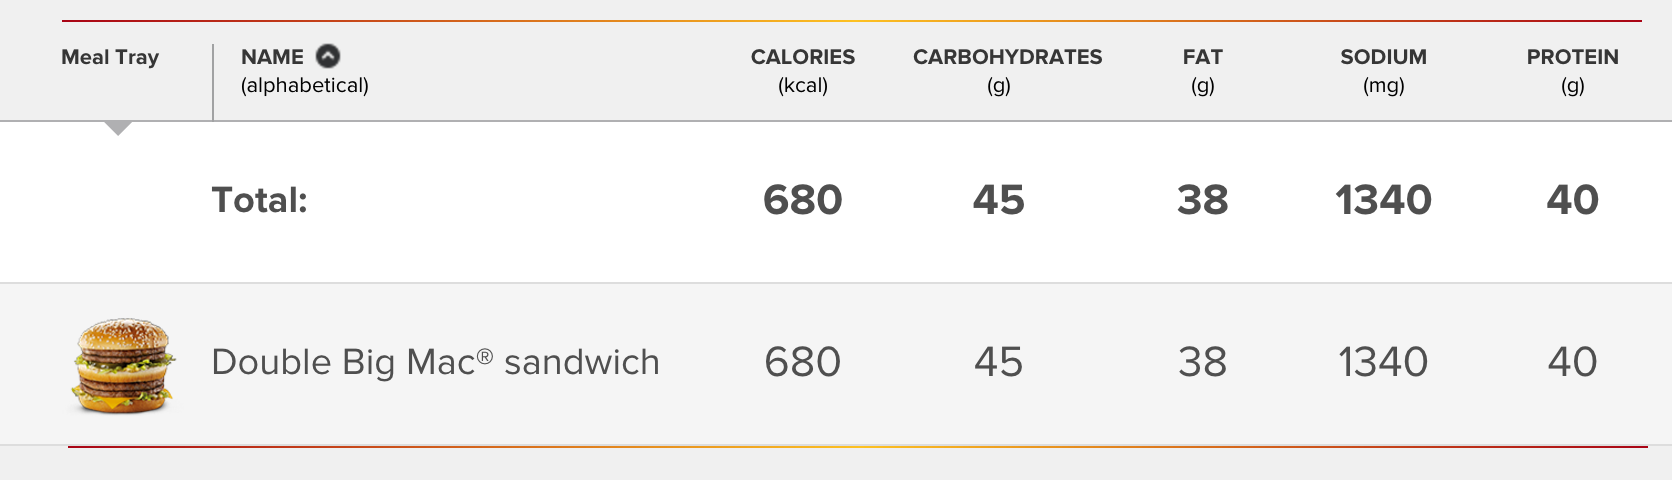 McDonald's kale salad has more fat and calories than a ...